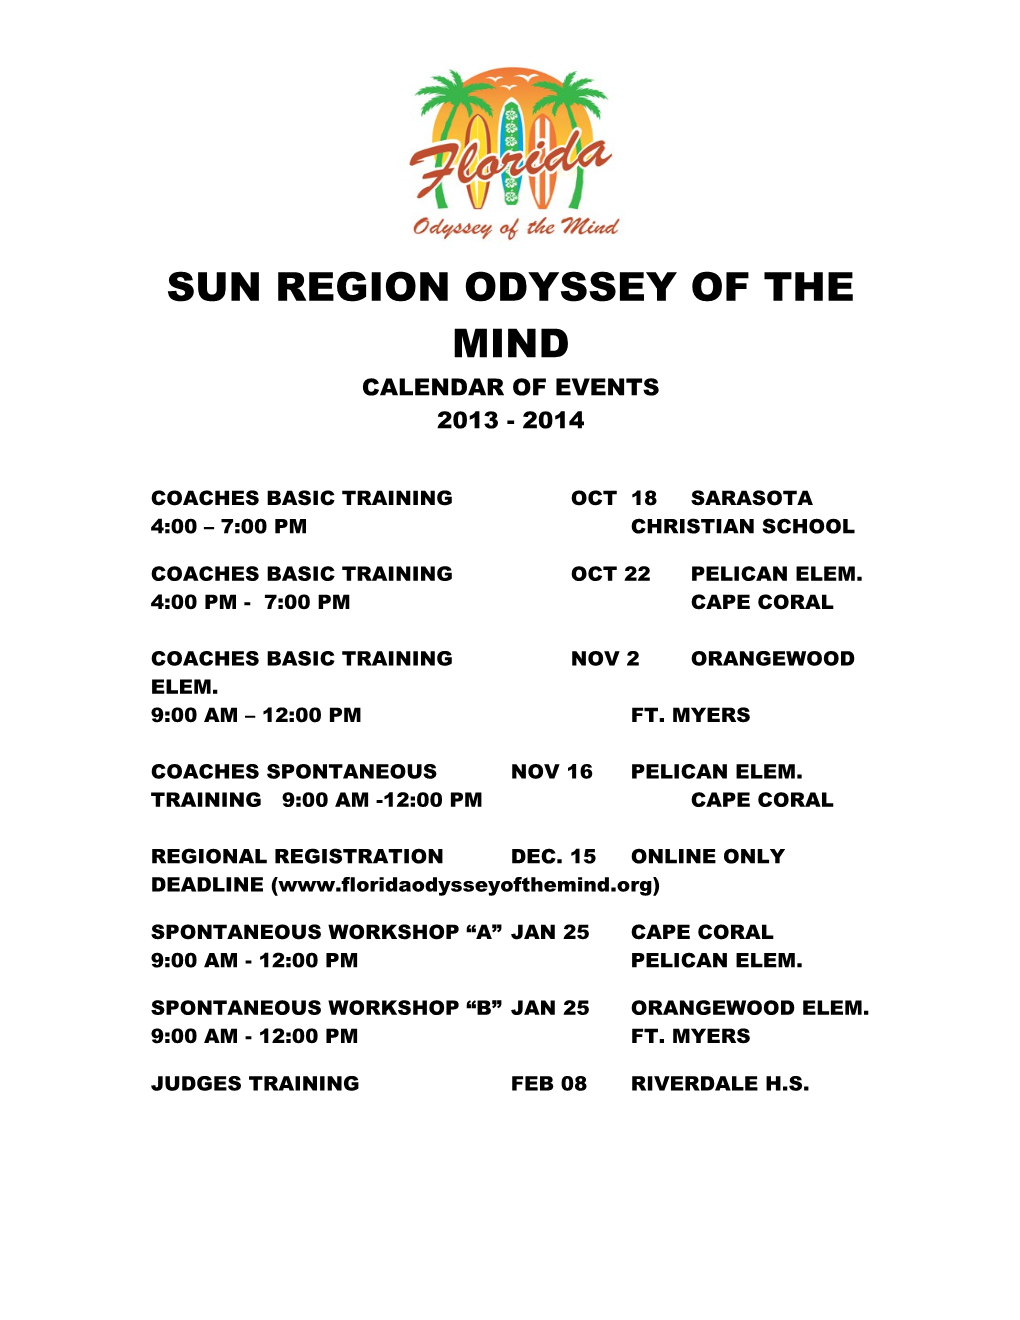 Sun Region Odyssey of the Mind